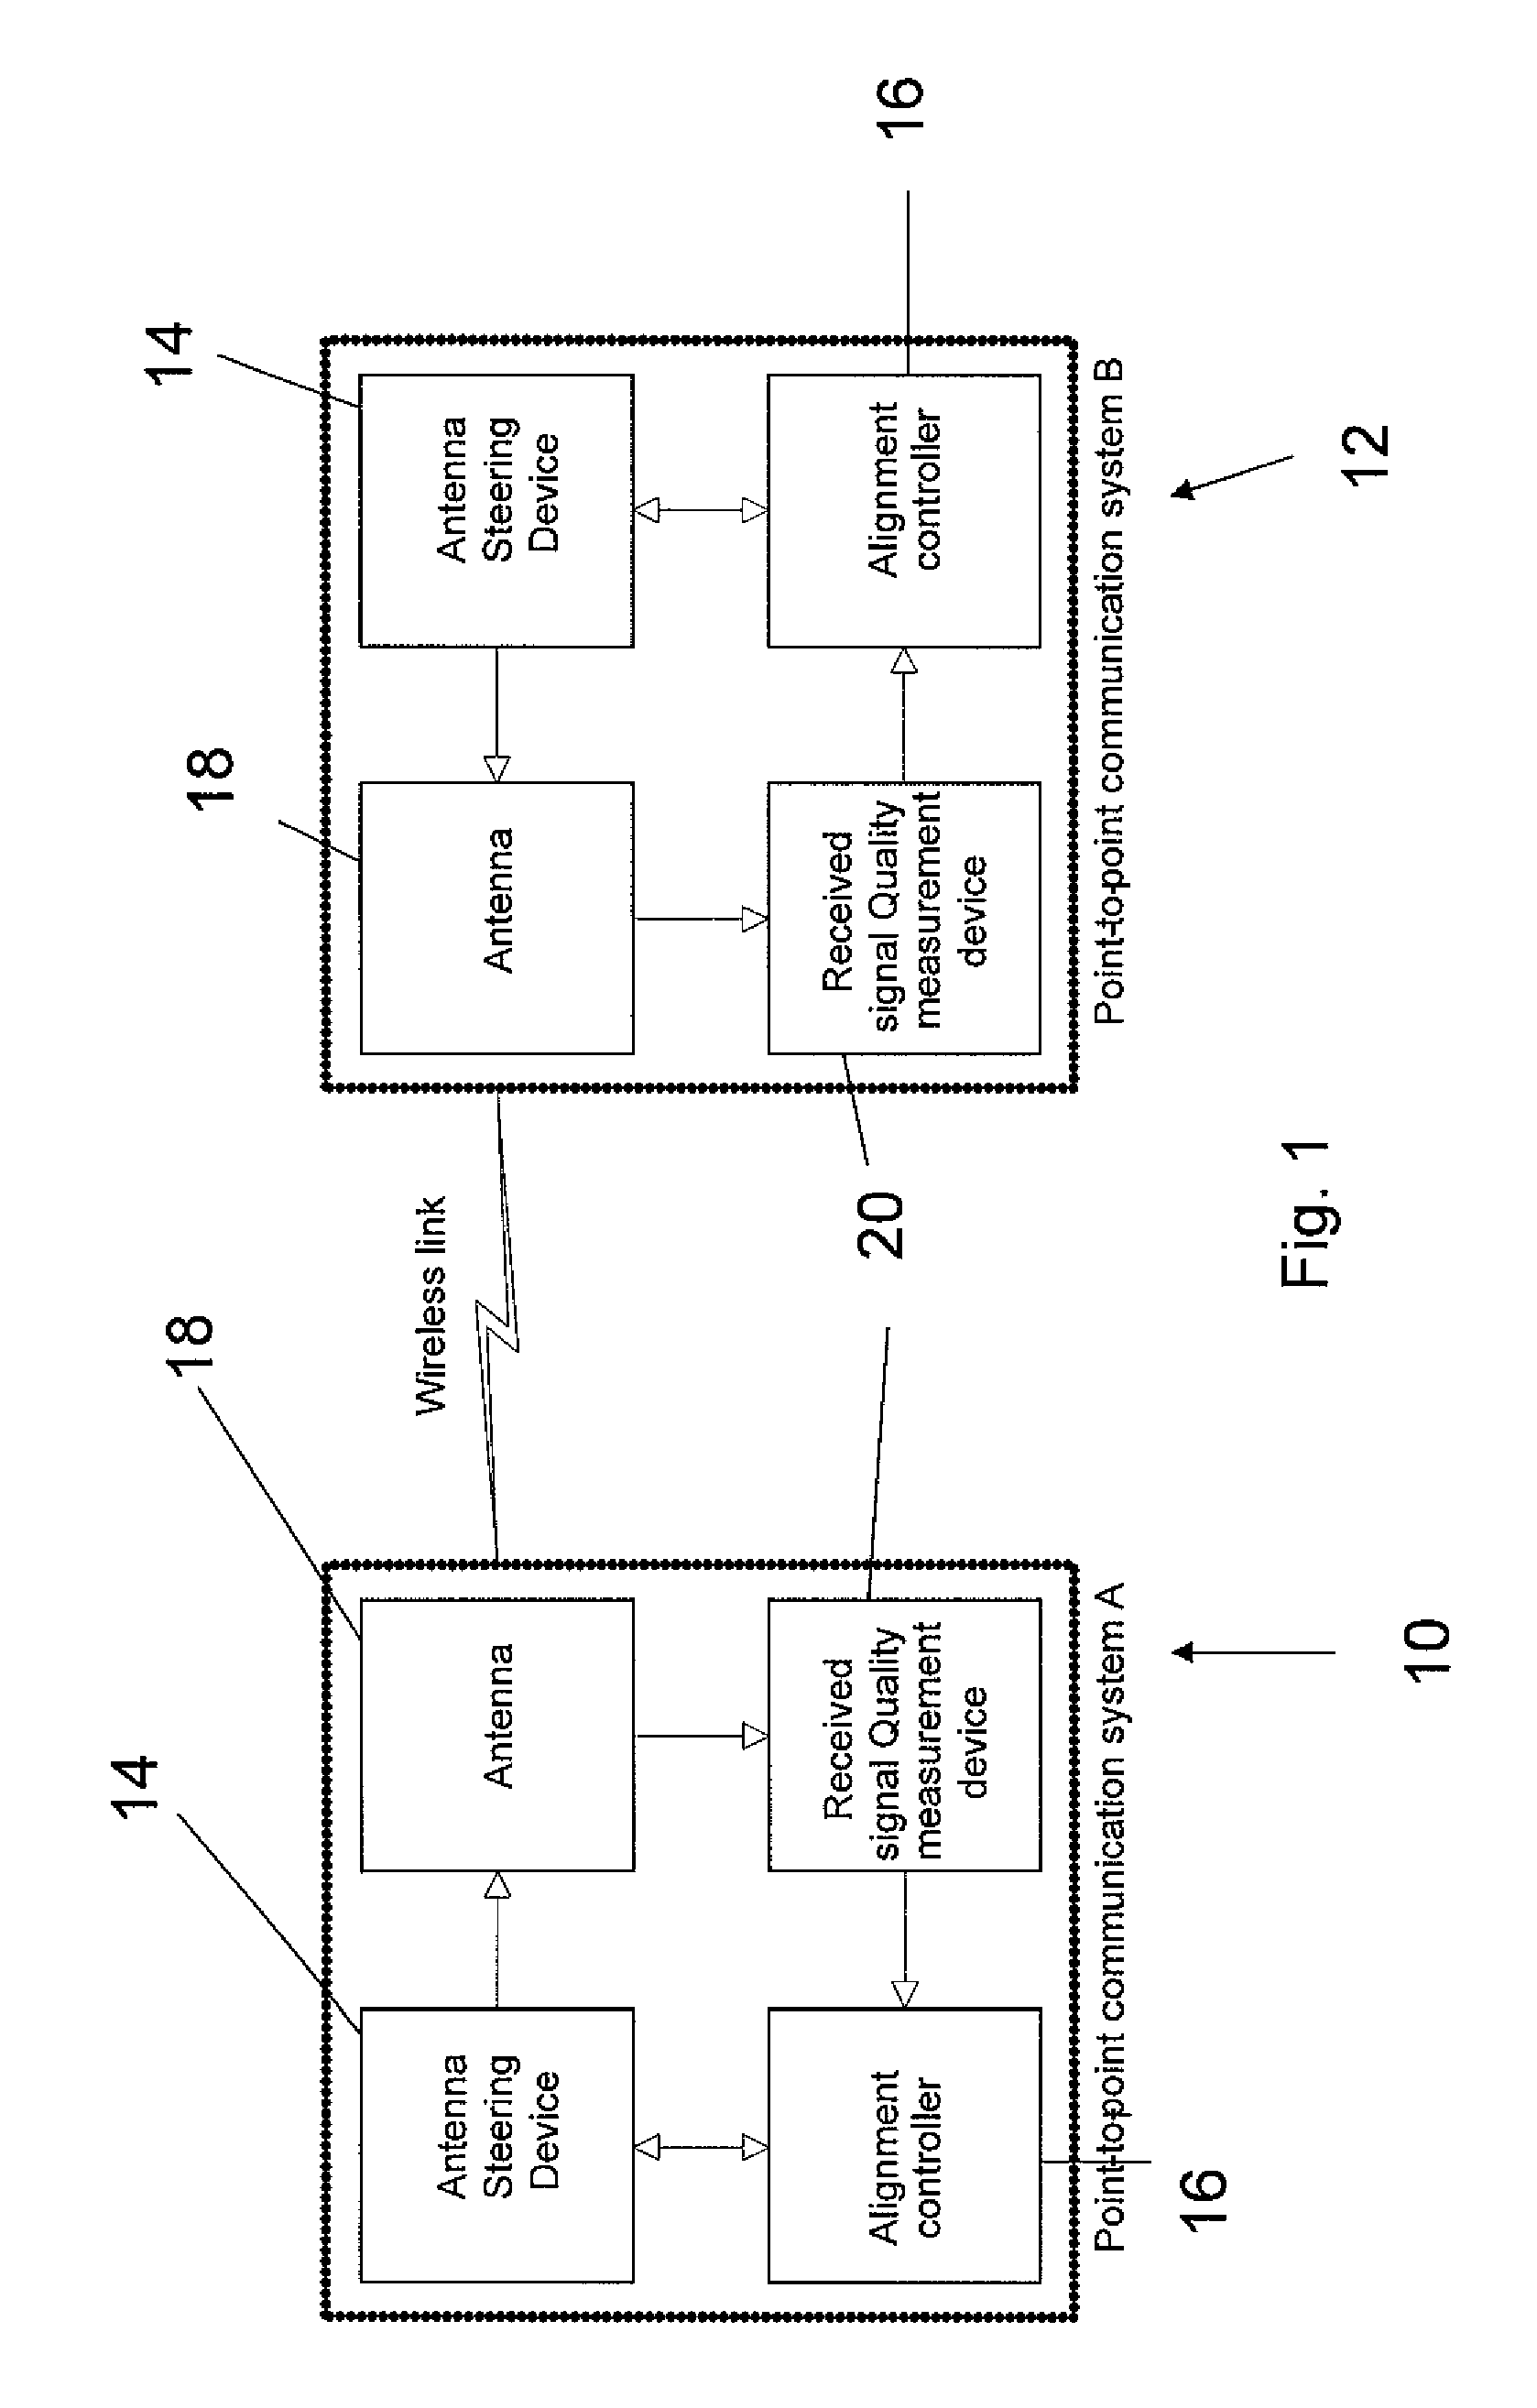 Antenna alignment method and apparatus